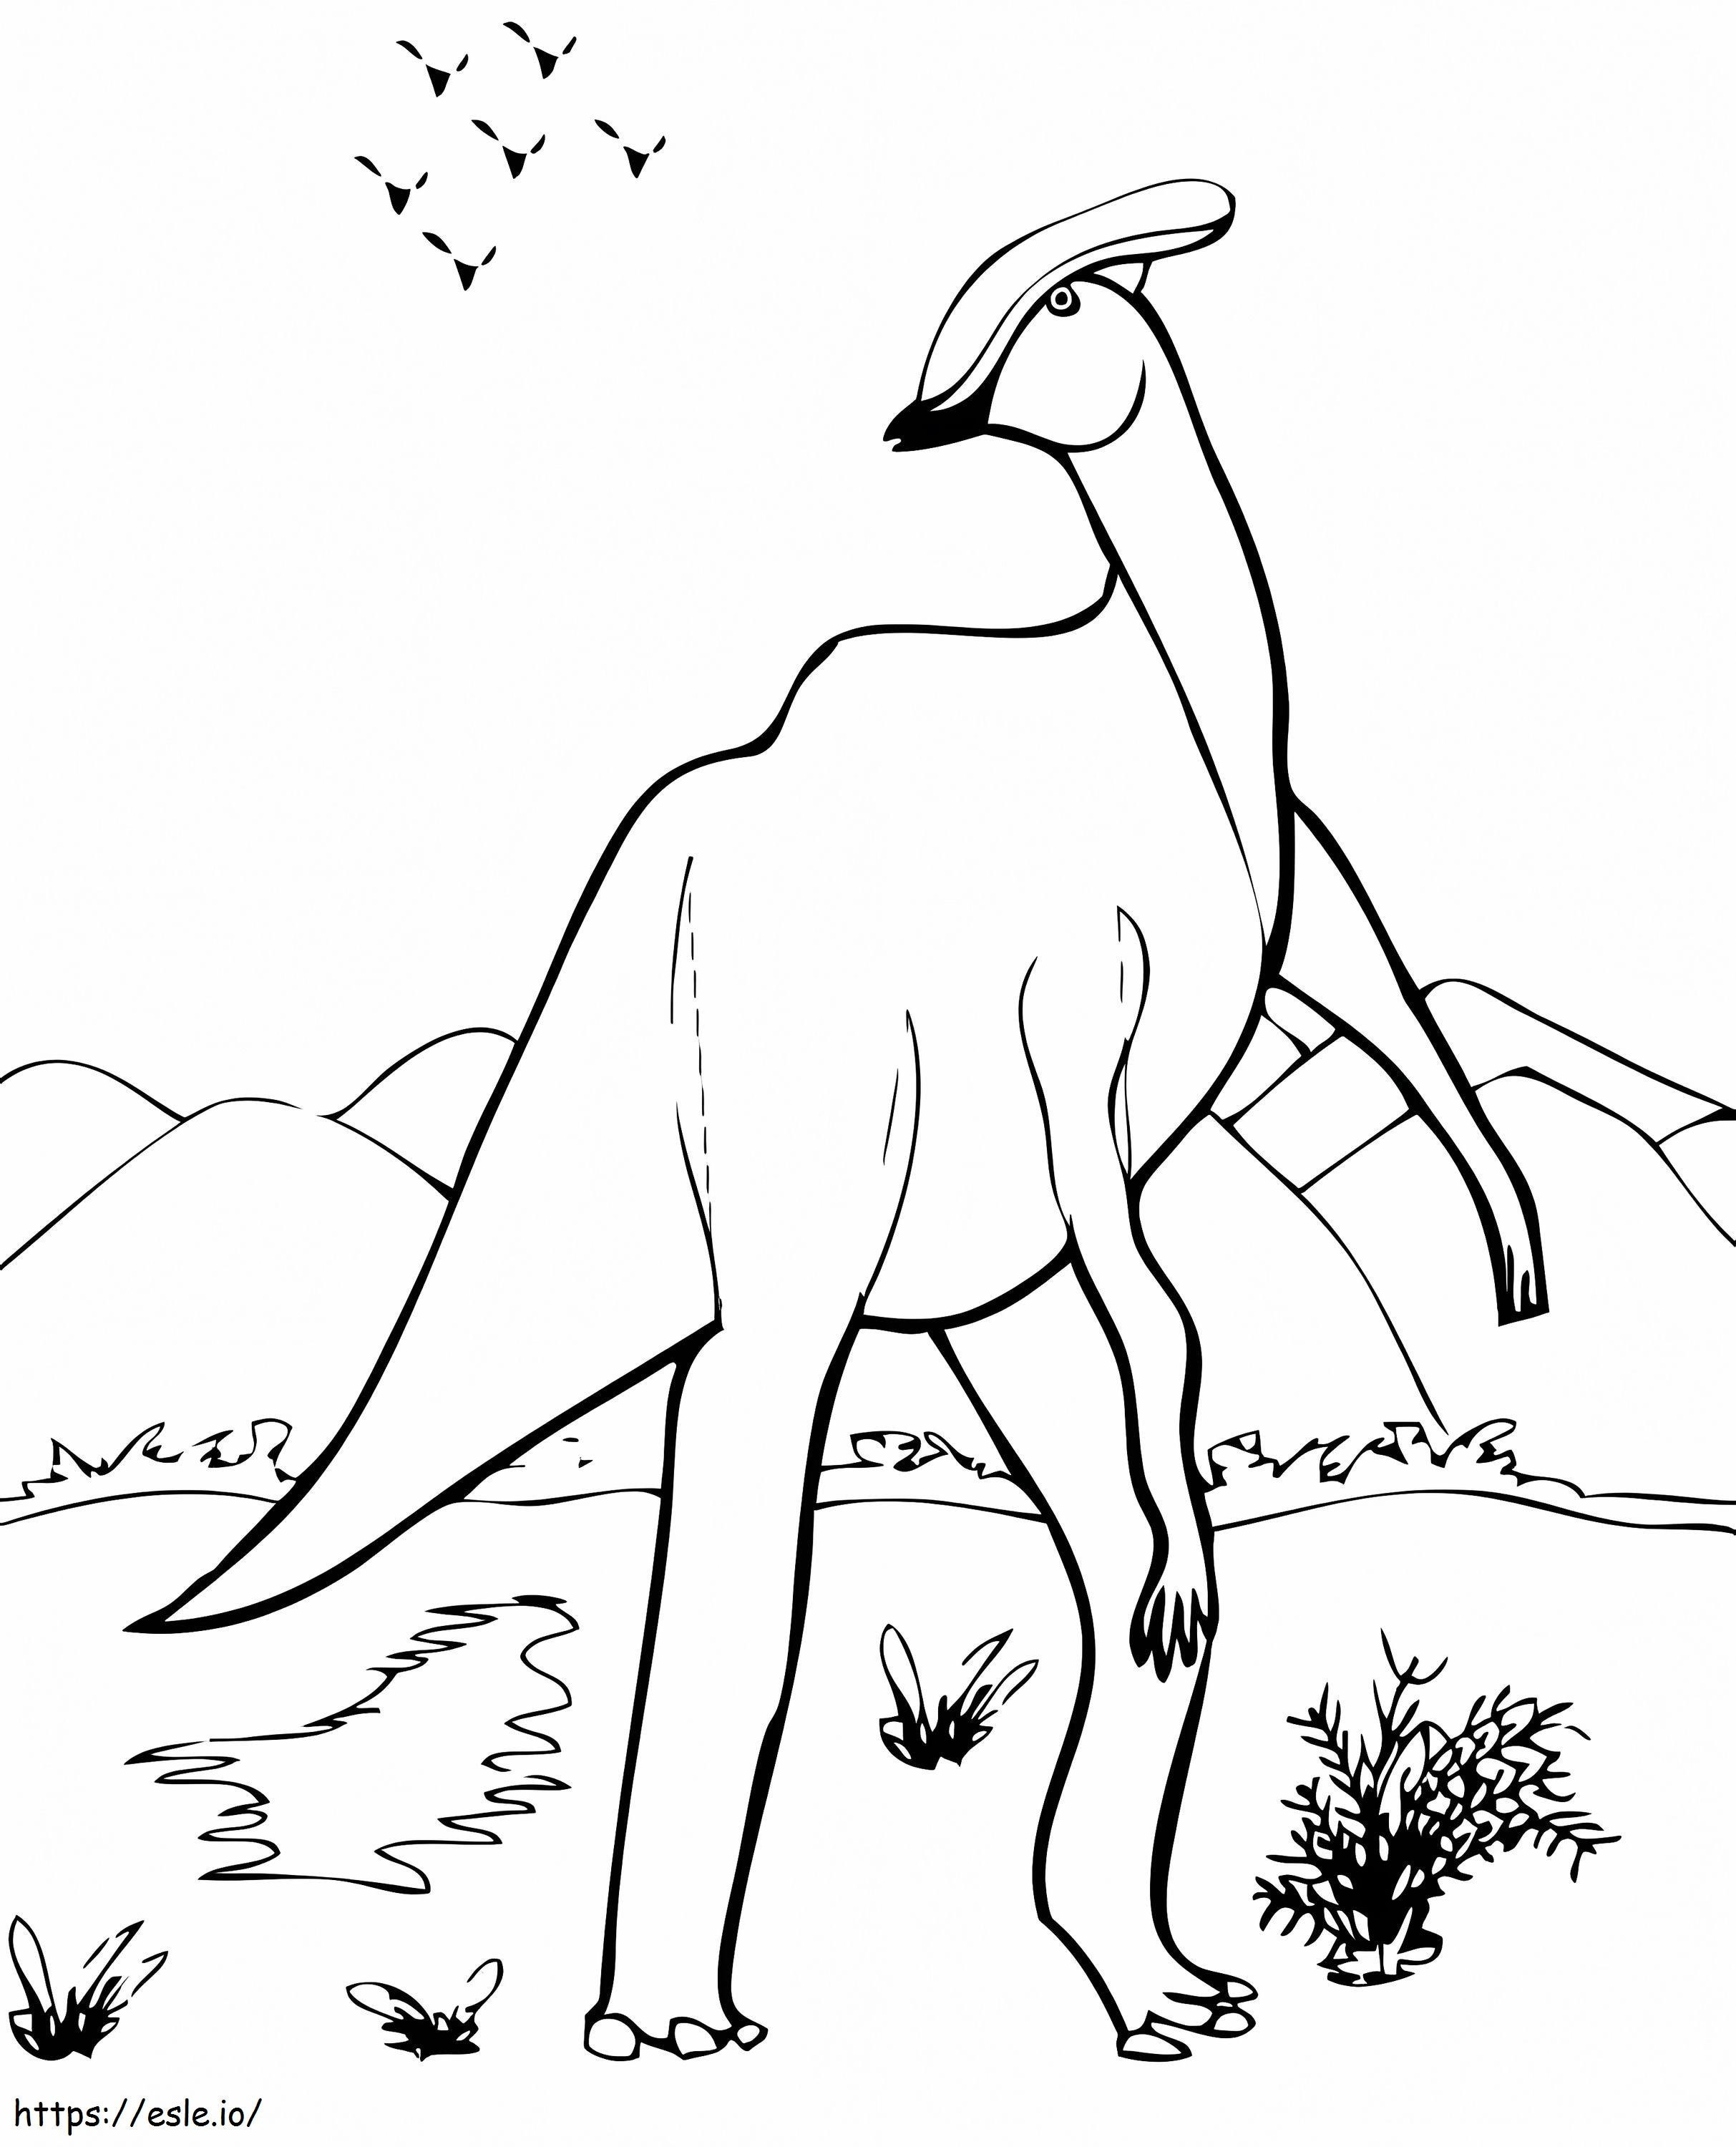 Dinosaur Parasaurolophus coloring page